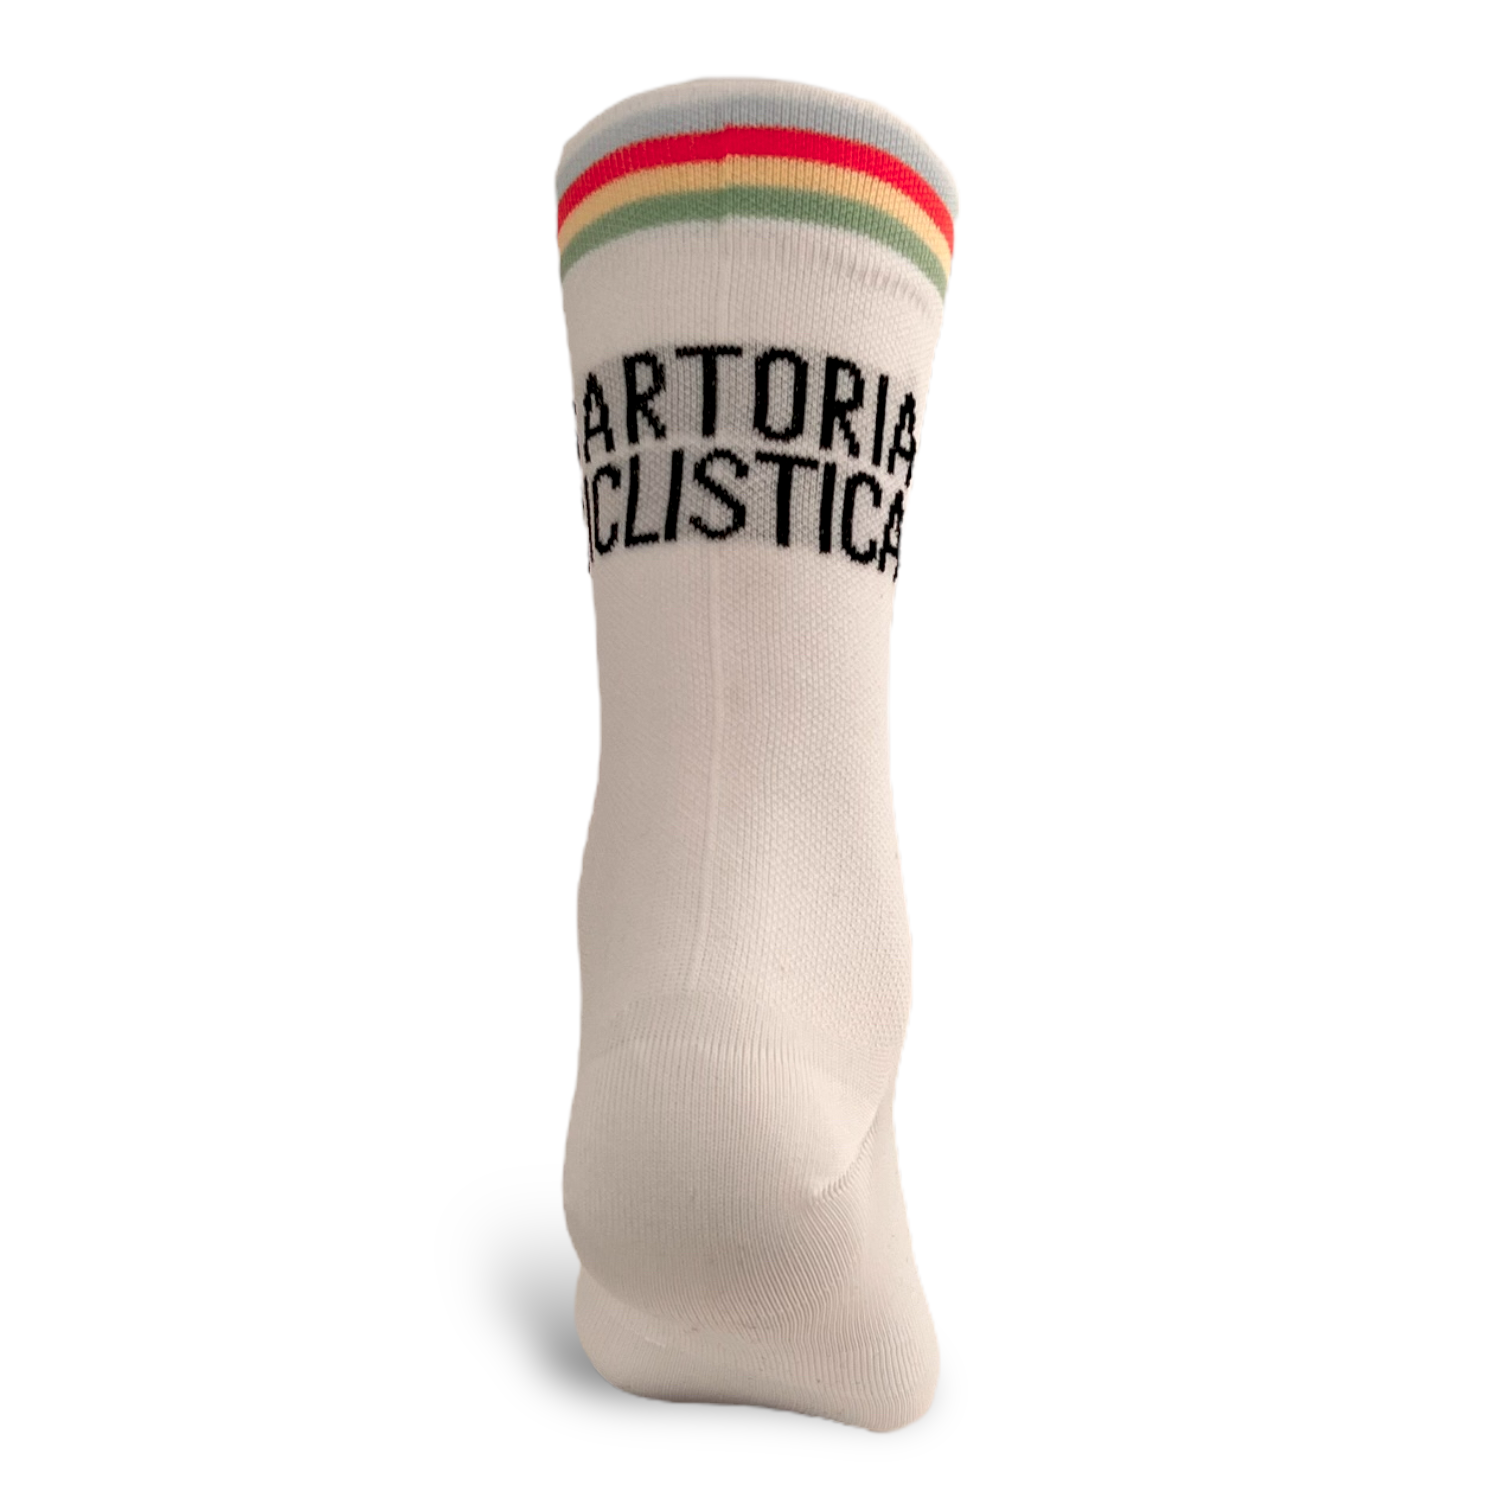 White Sartoria ciclistica socks